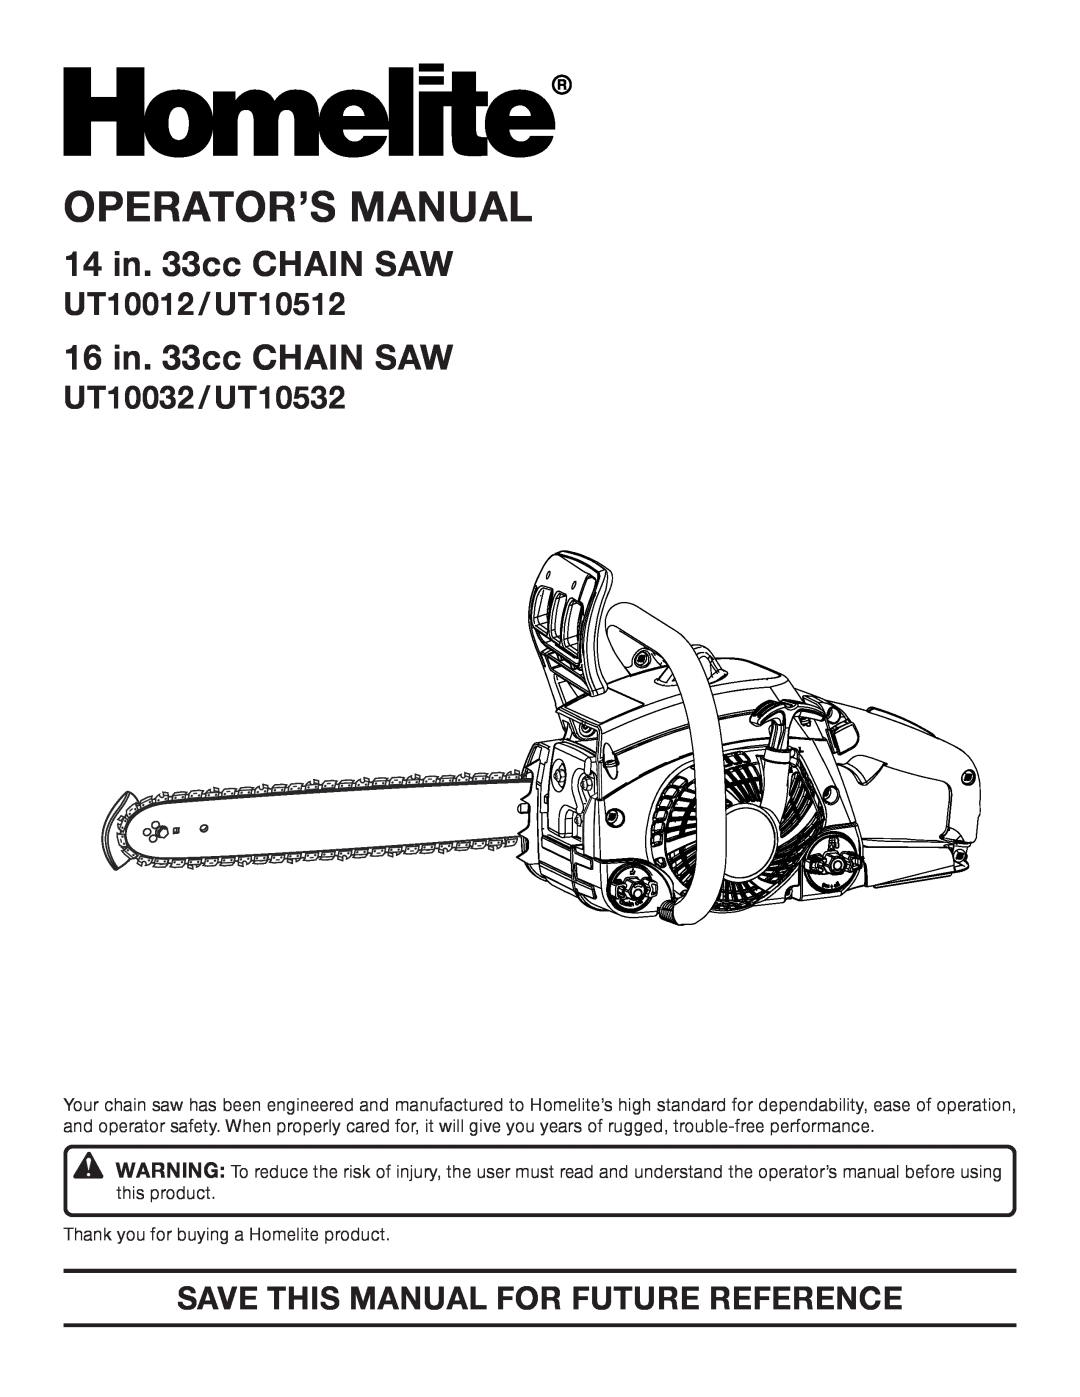 Homelite manual Operator’S Manual, 14 in. 33cc CHAIN SAW, 16 in. 33cc CHAIN SAW, UT10012 / UT10512, UT10032 / UT10532 